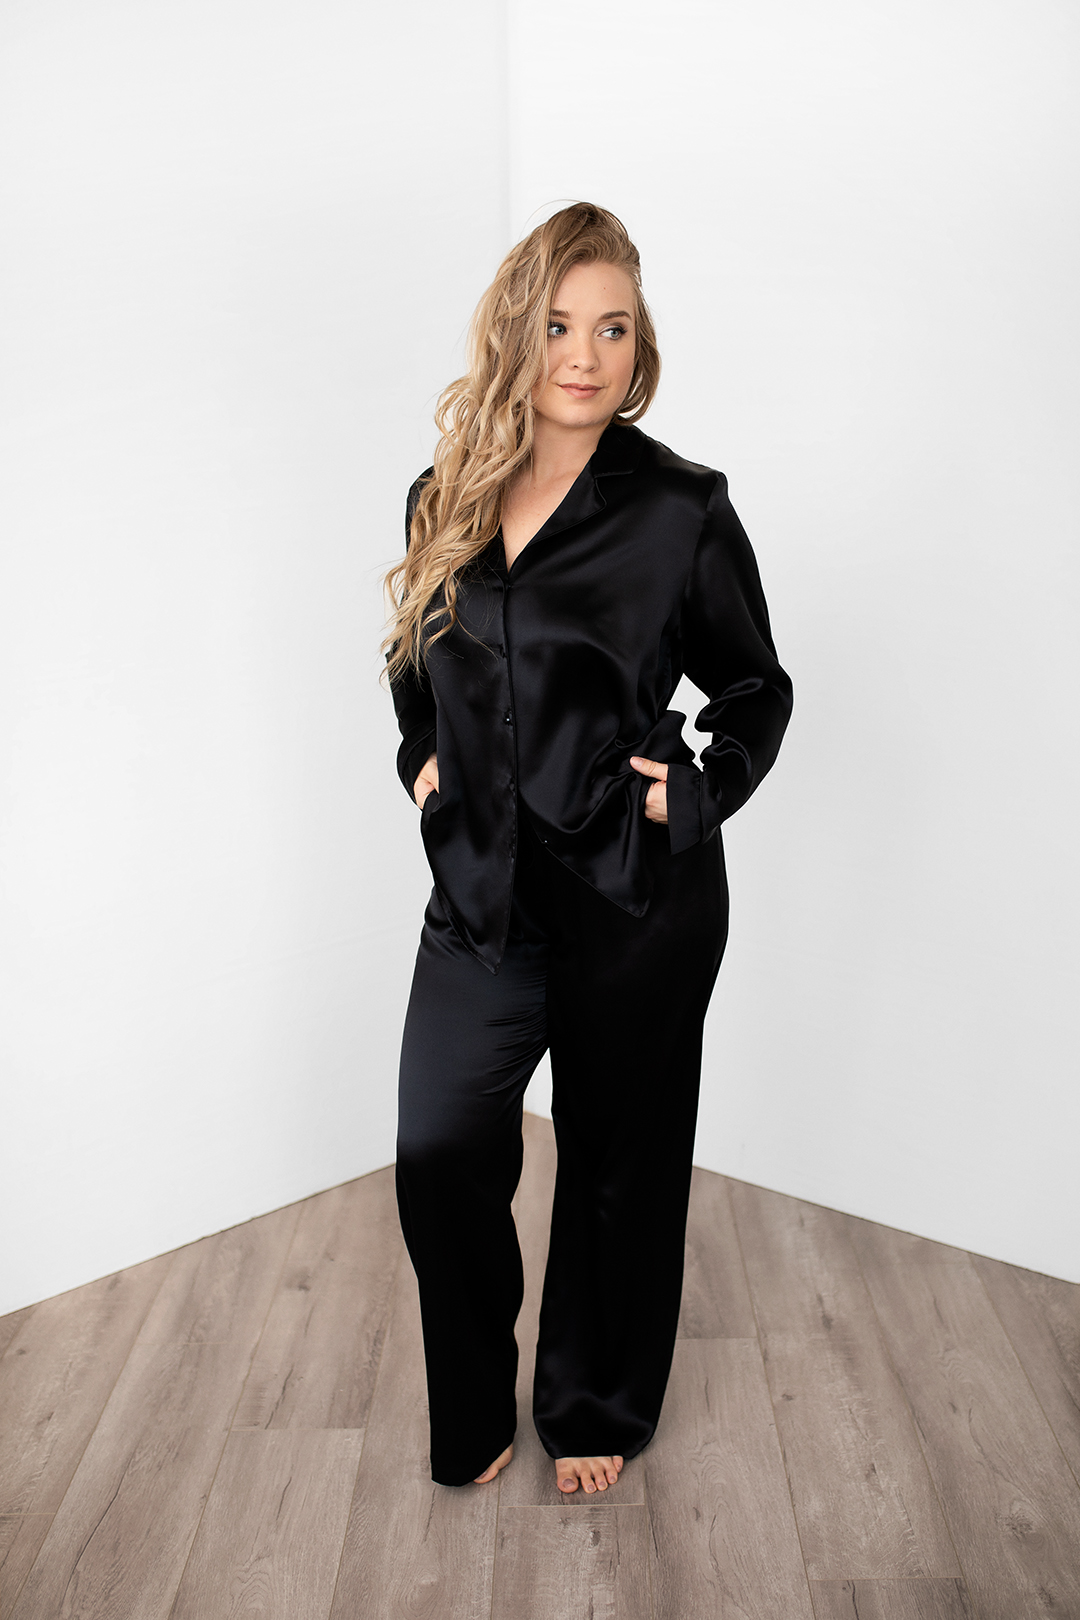 Stars Printed Black Silk Pajamas For Women, RachelSilk